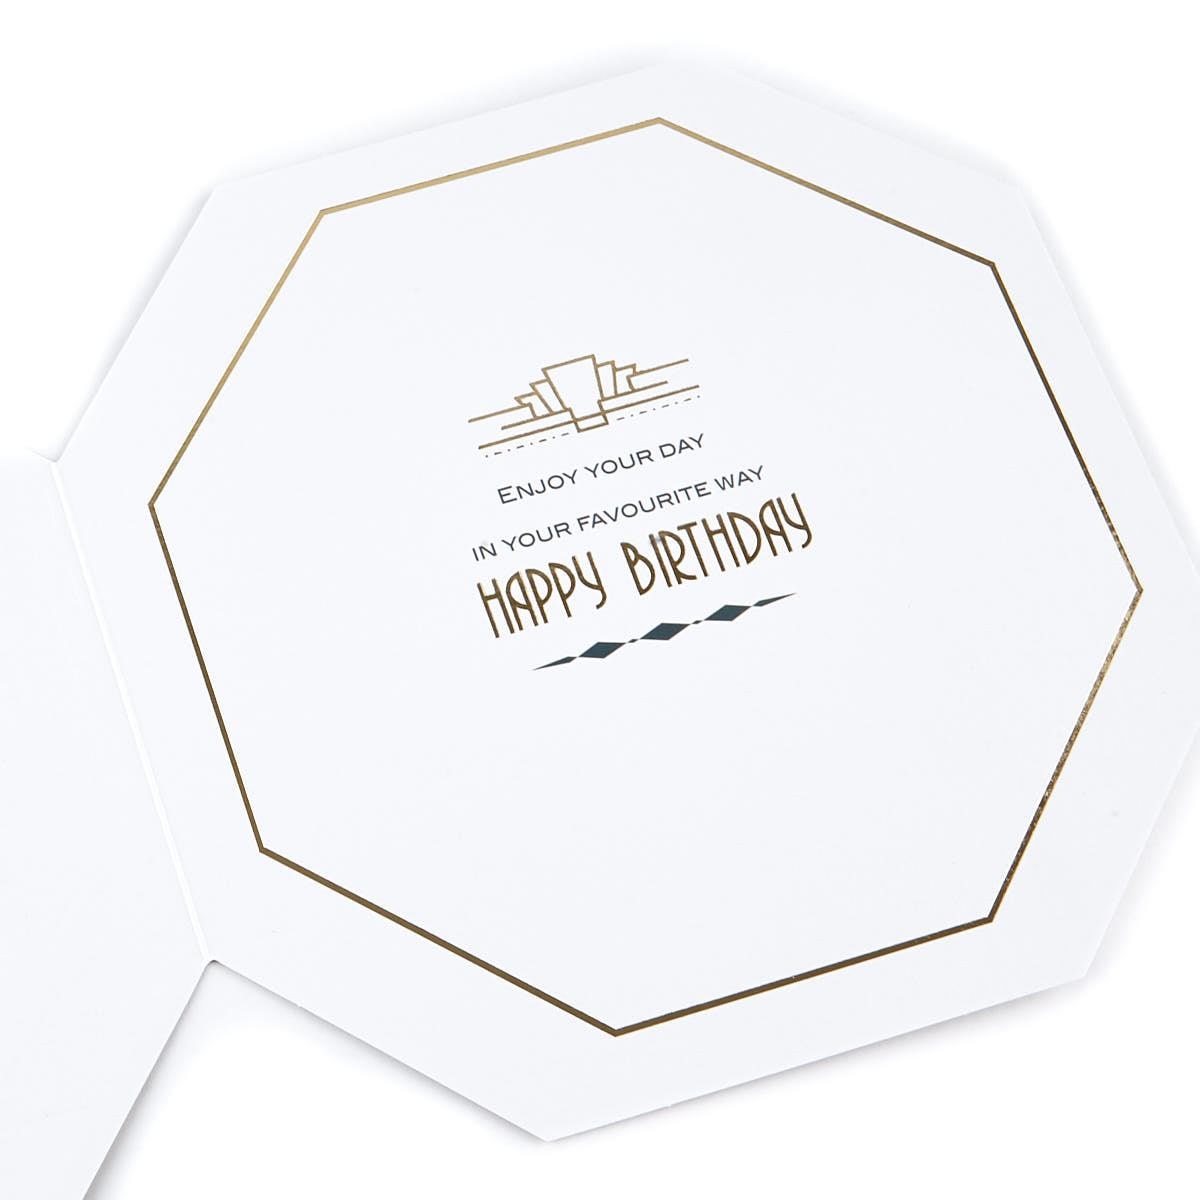 Platinum Collection Birthday Card - Grandad Geometric